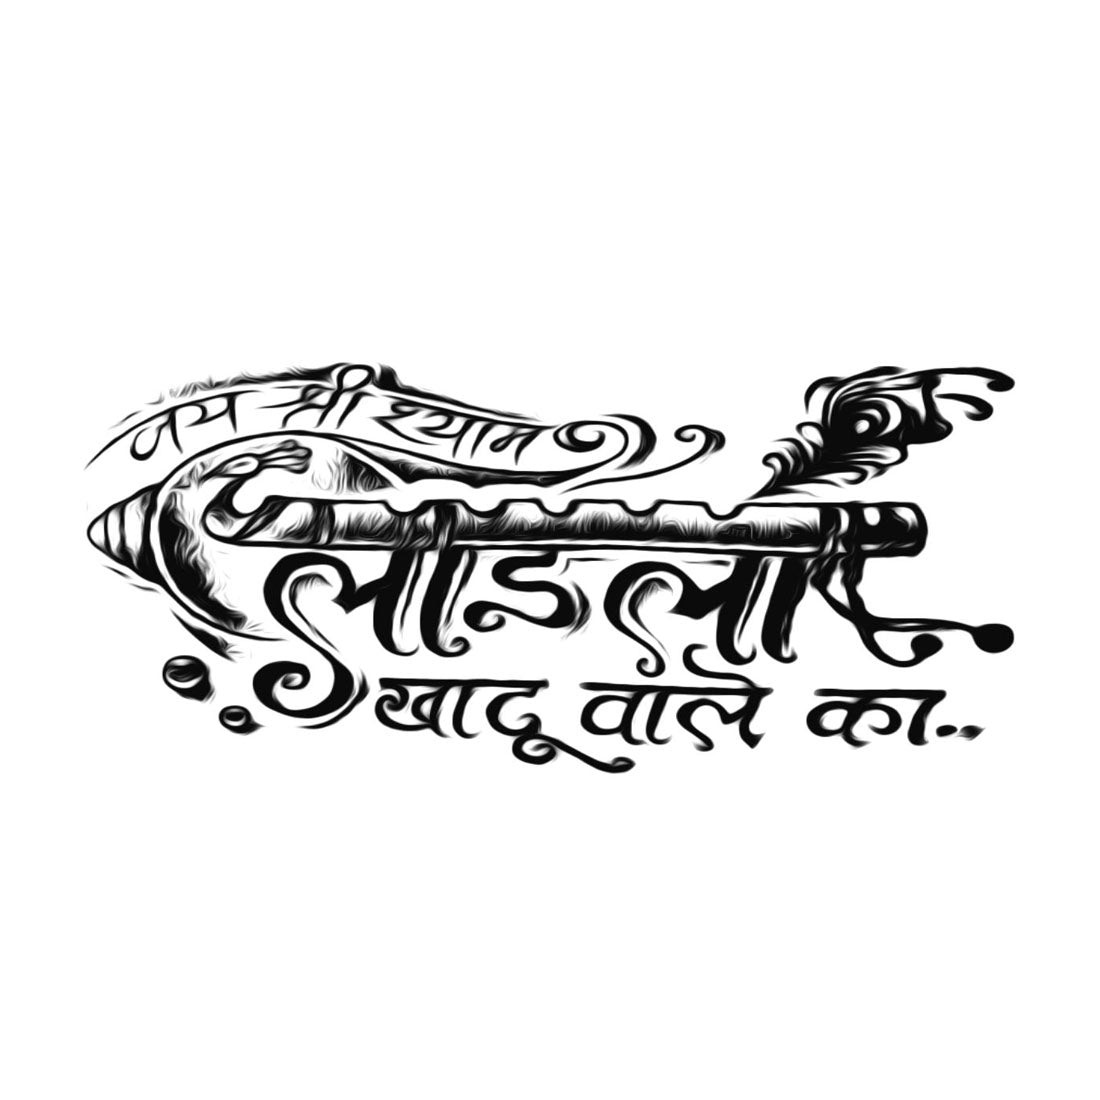 Heaven Of Tattoos in Vesu,Surat - Best Tattoo Artists in Surat - Justdial